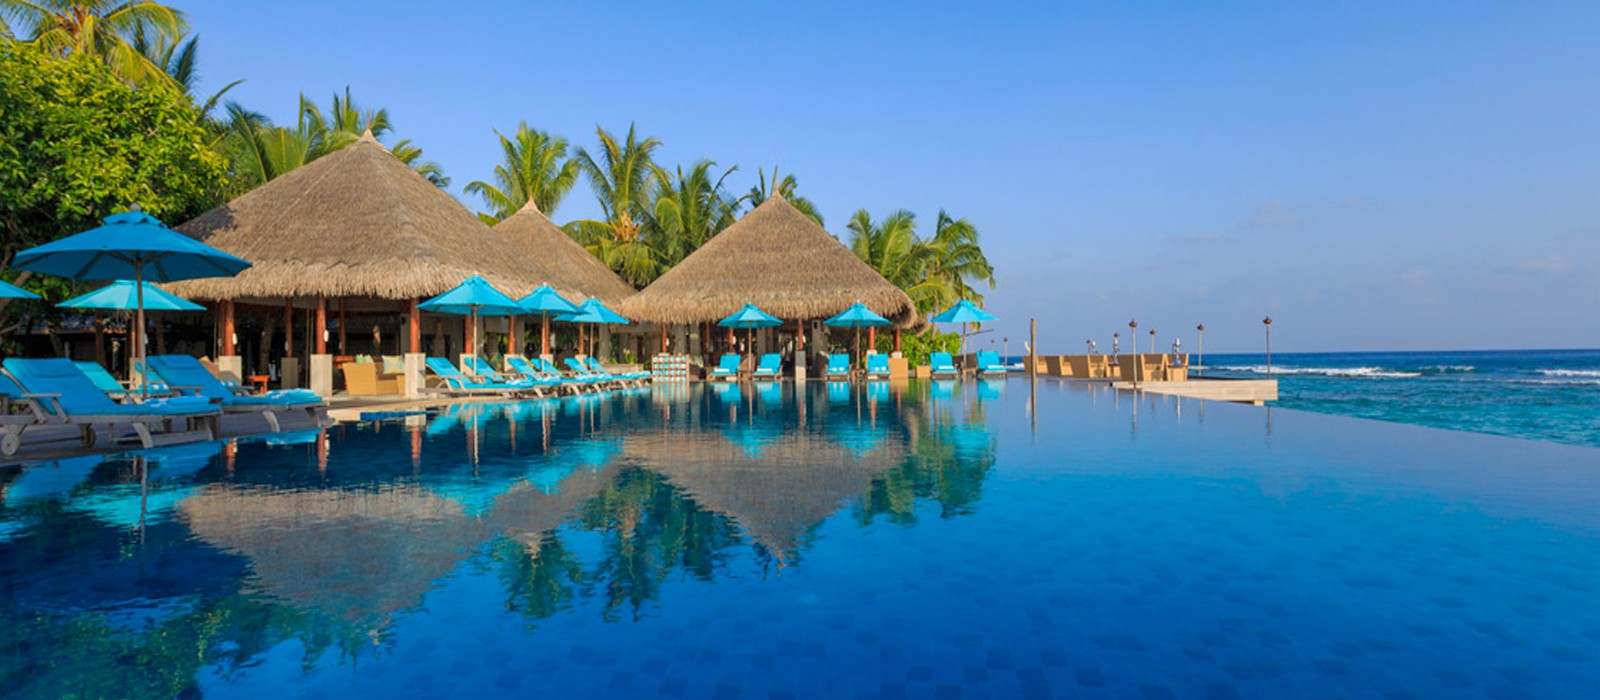 Anantara Veli Resort Maldives - maldives luxury holiday packages - header